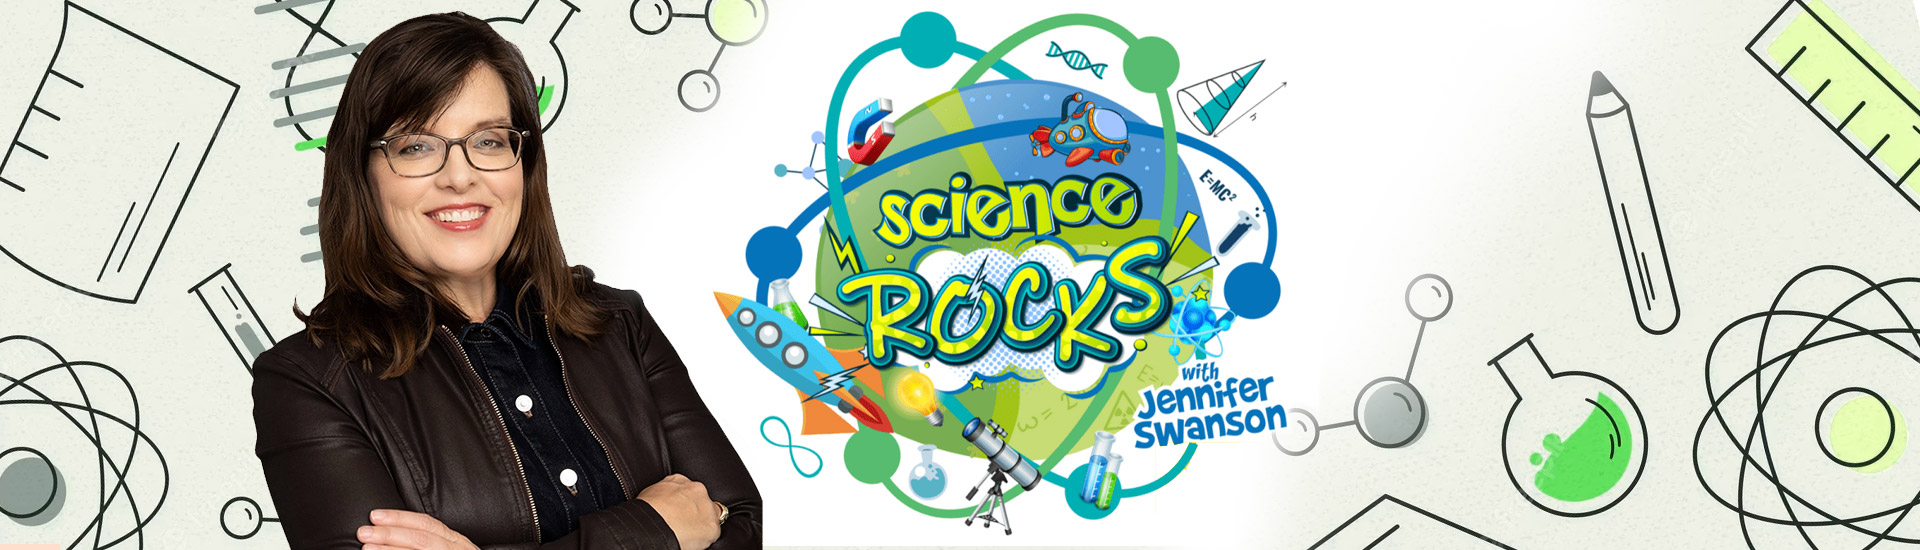 Science Rocks With Jennifer Swanson